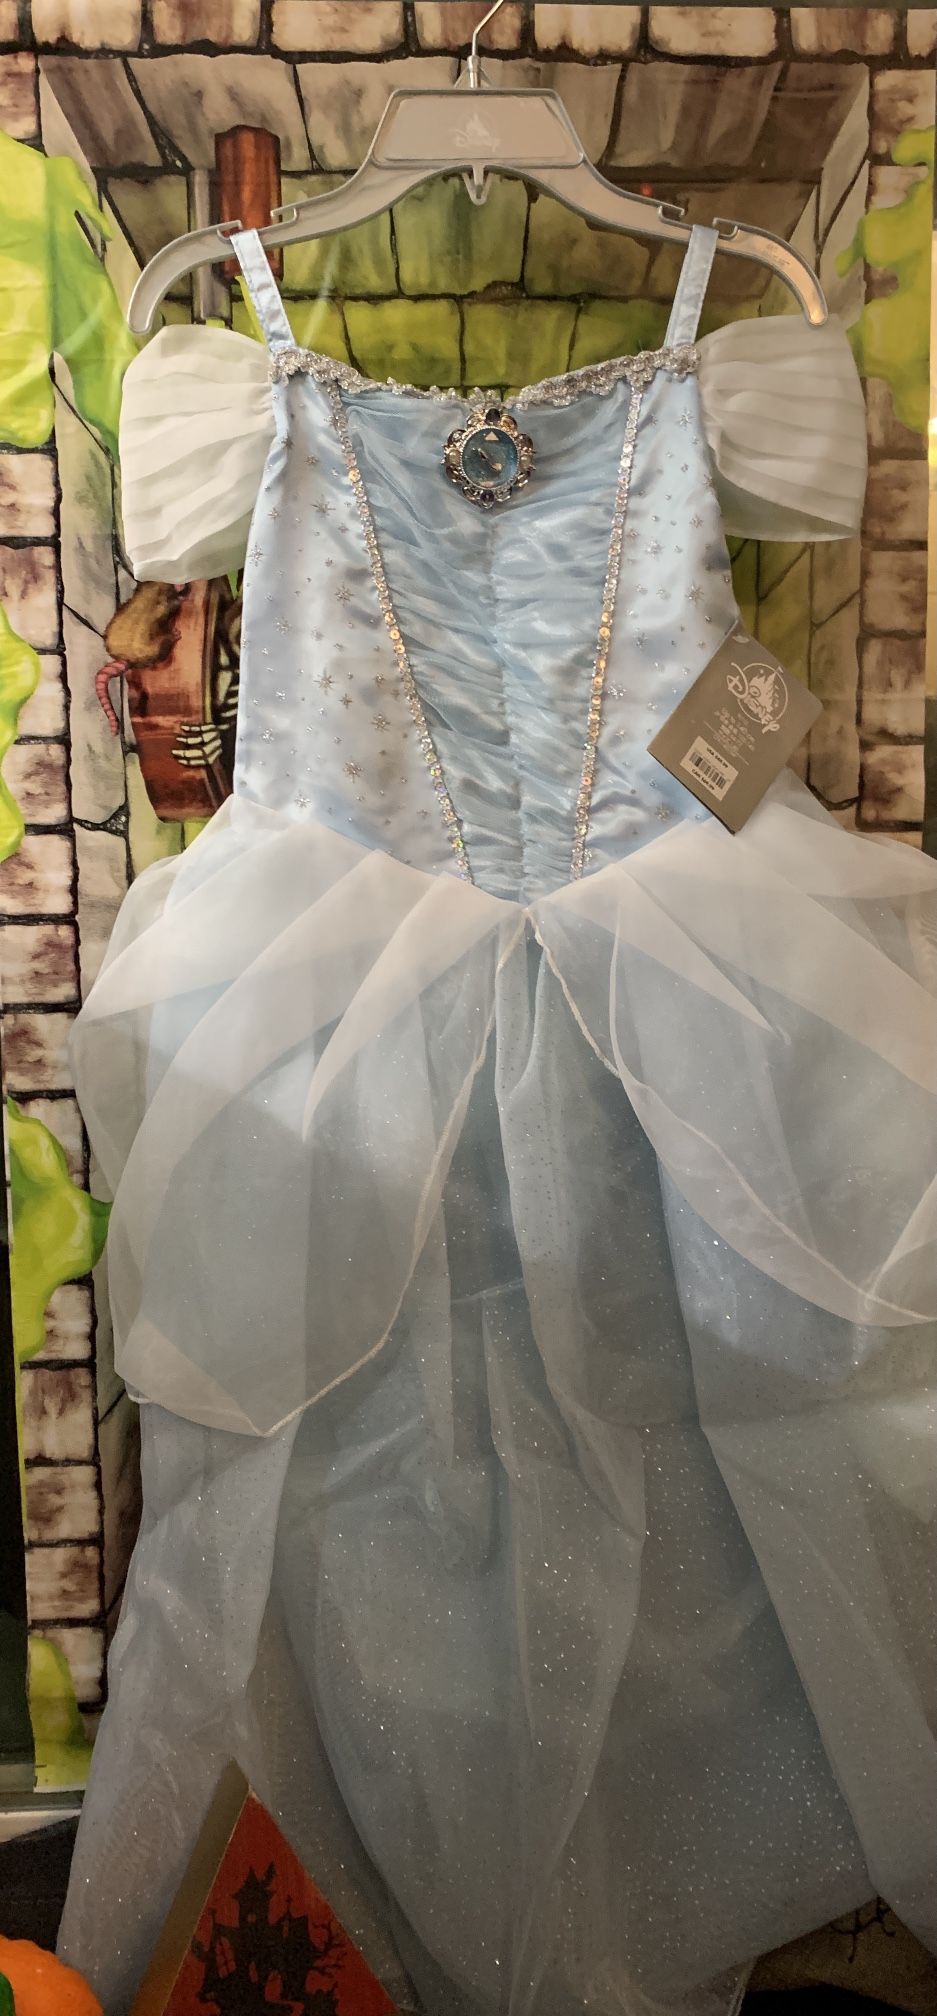 New Disney Costume - Cinderella - Size 9/10 - $25